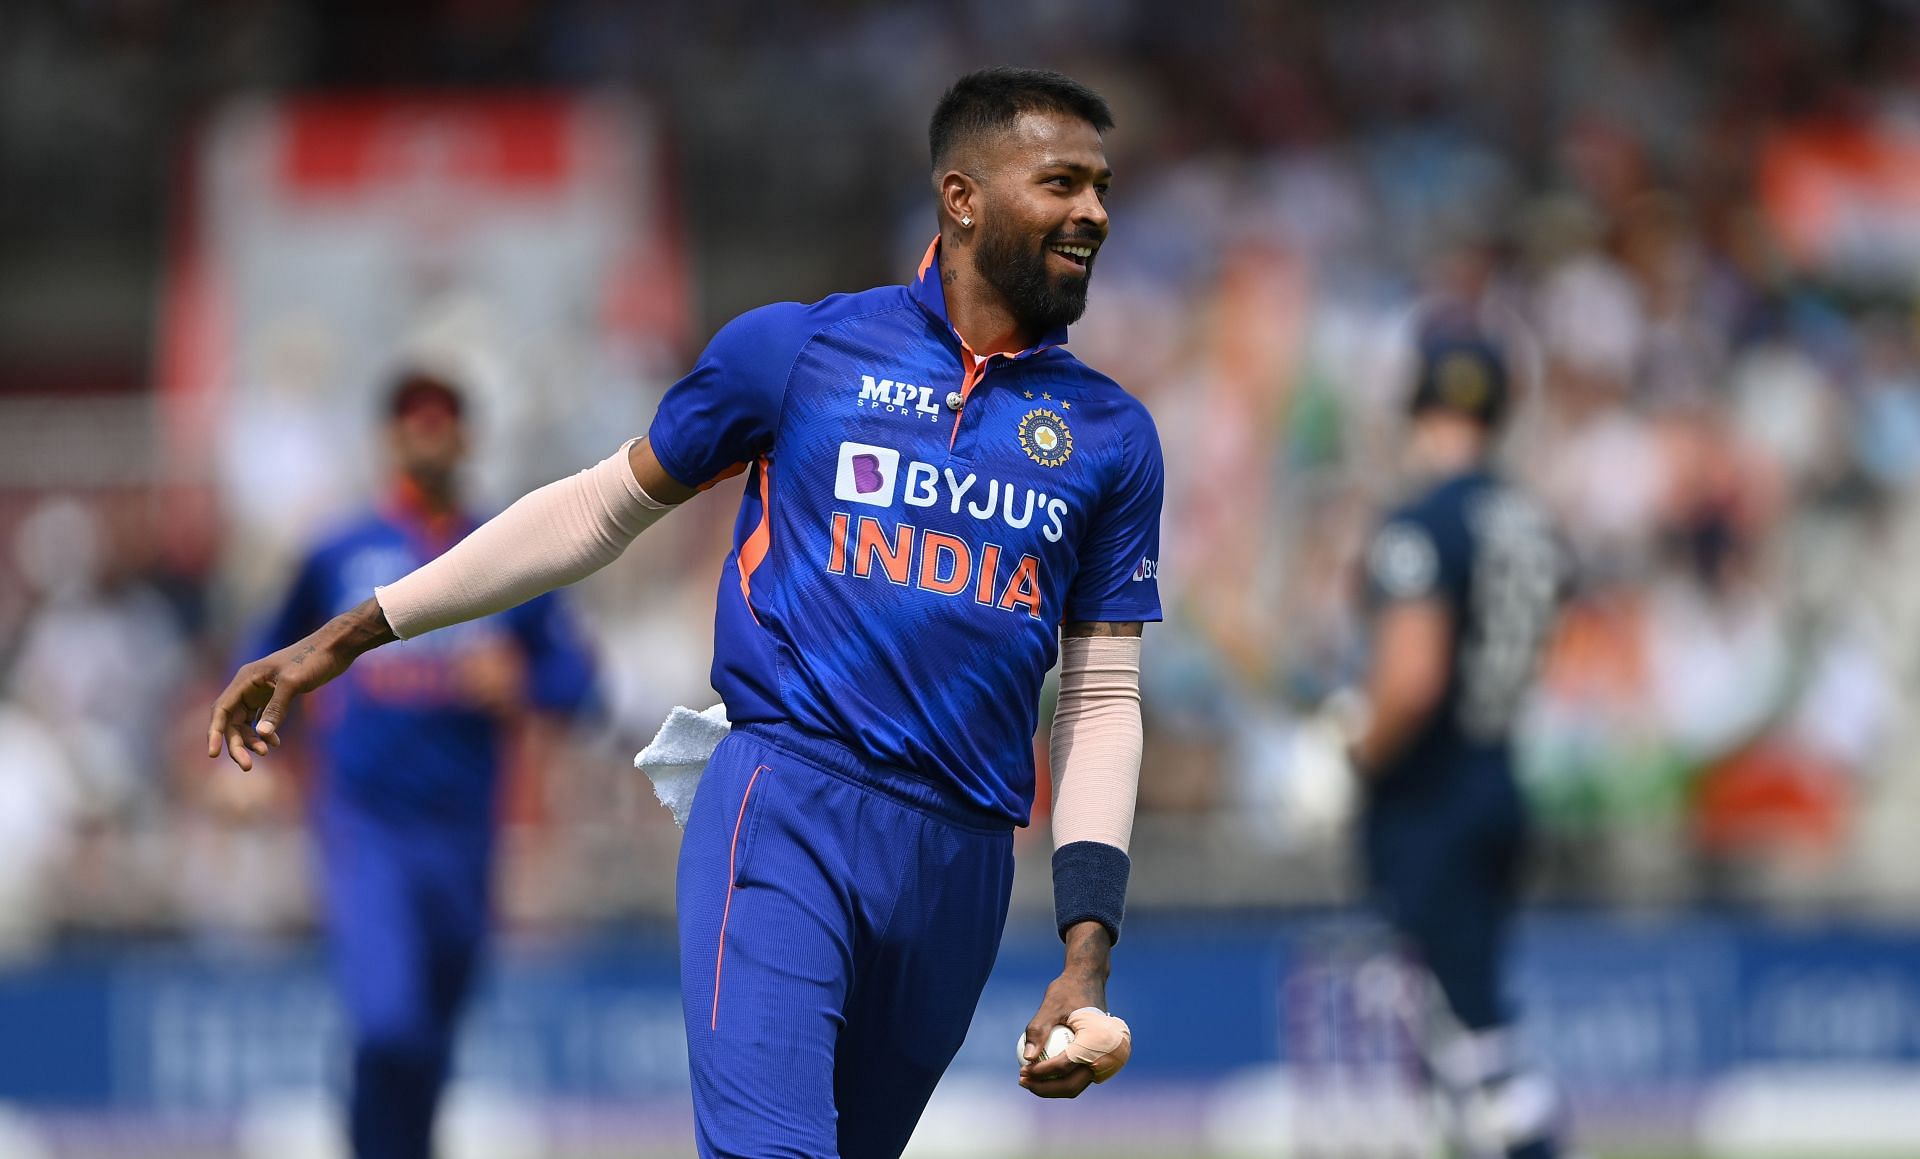 Hardik Pandya brings a lot of balance to the Indian playing XI